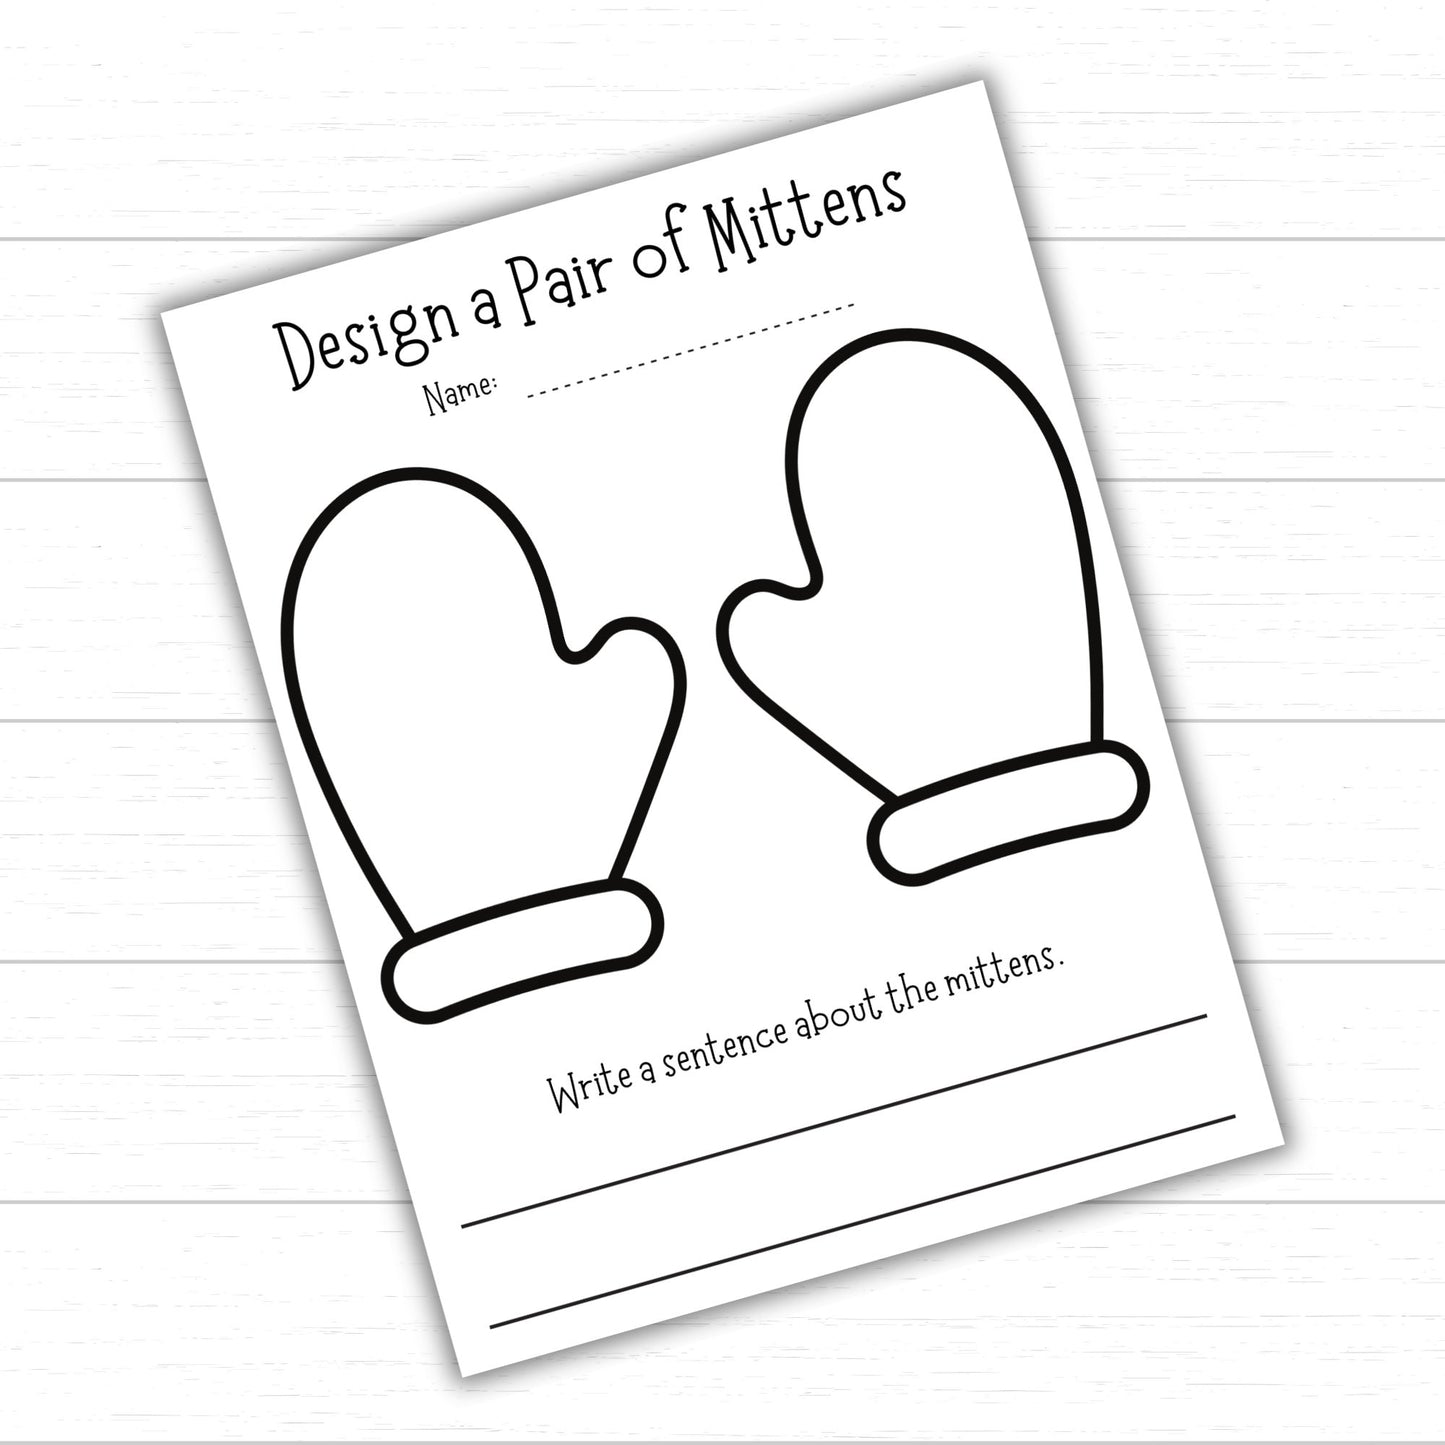 Design a Pair of Mittens, Printable Mitten Template, Winter Writing Activity, Mitten Printables, Winter Activities for Kids, Mitten Designs